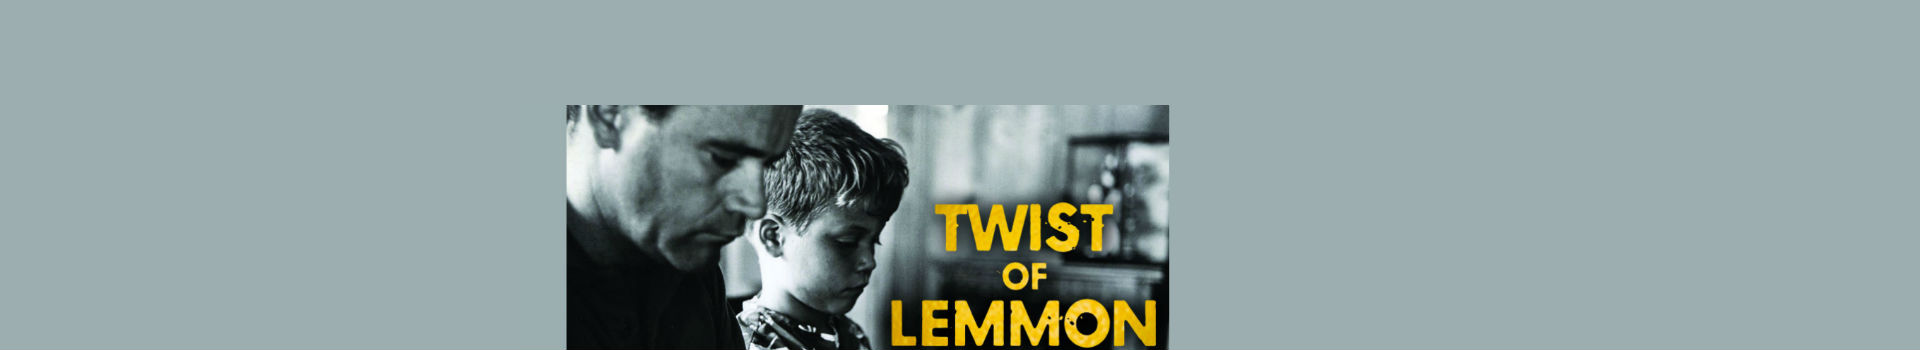 Twist of Lemmon banner image